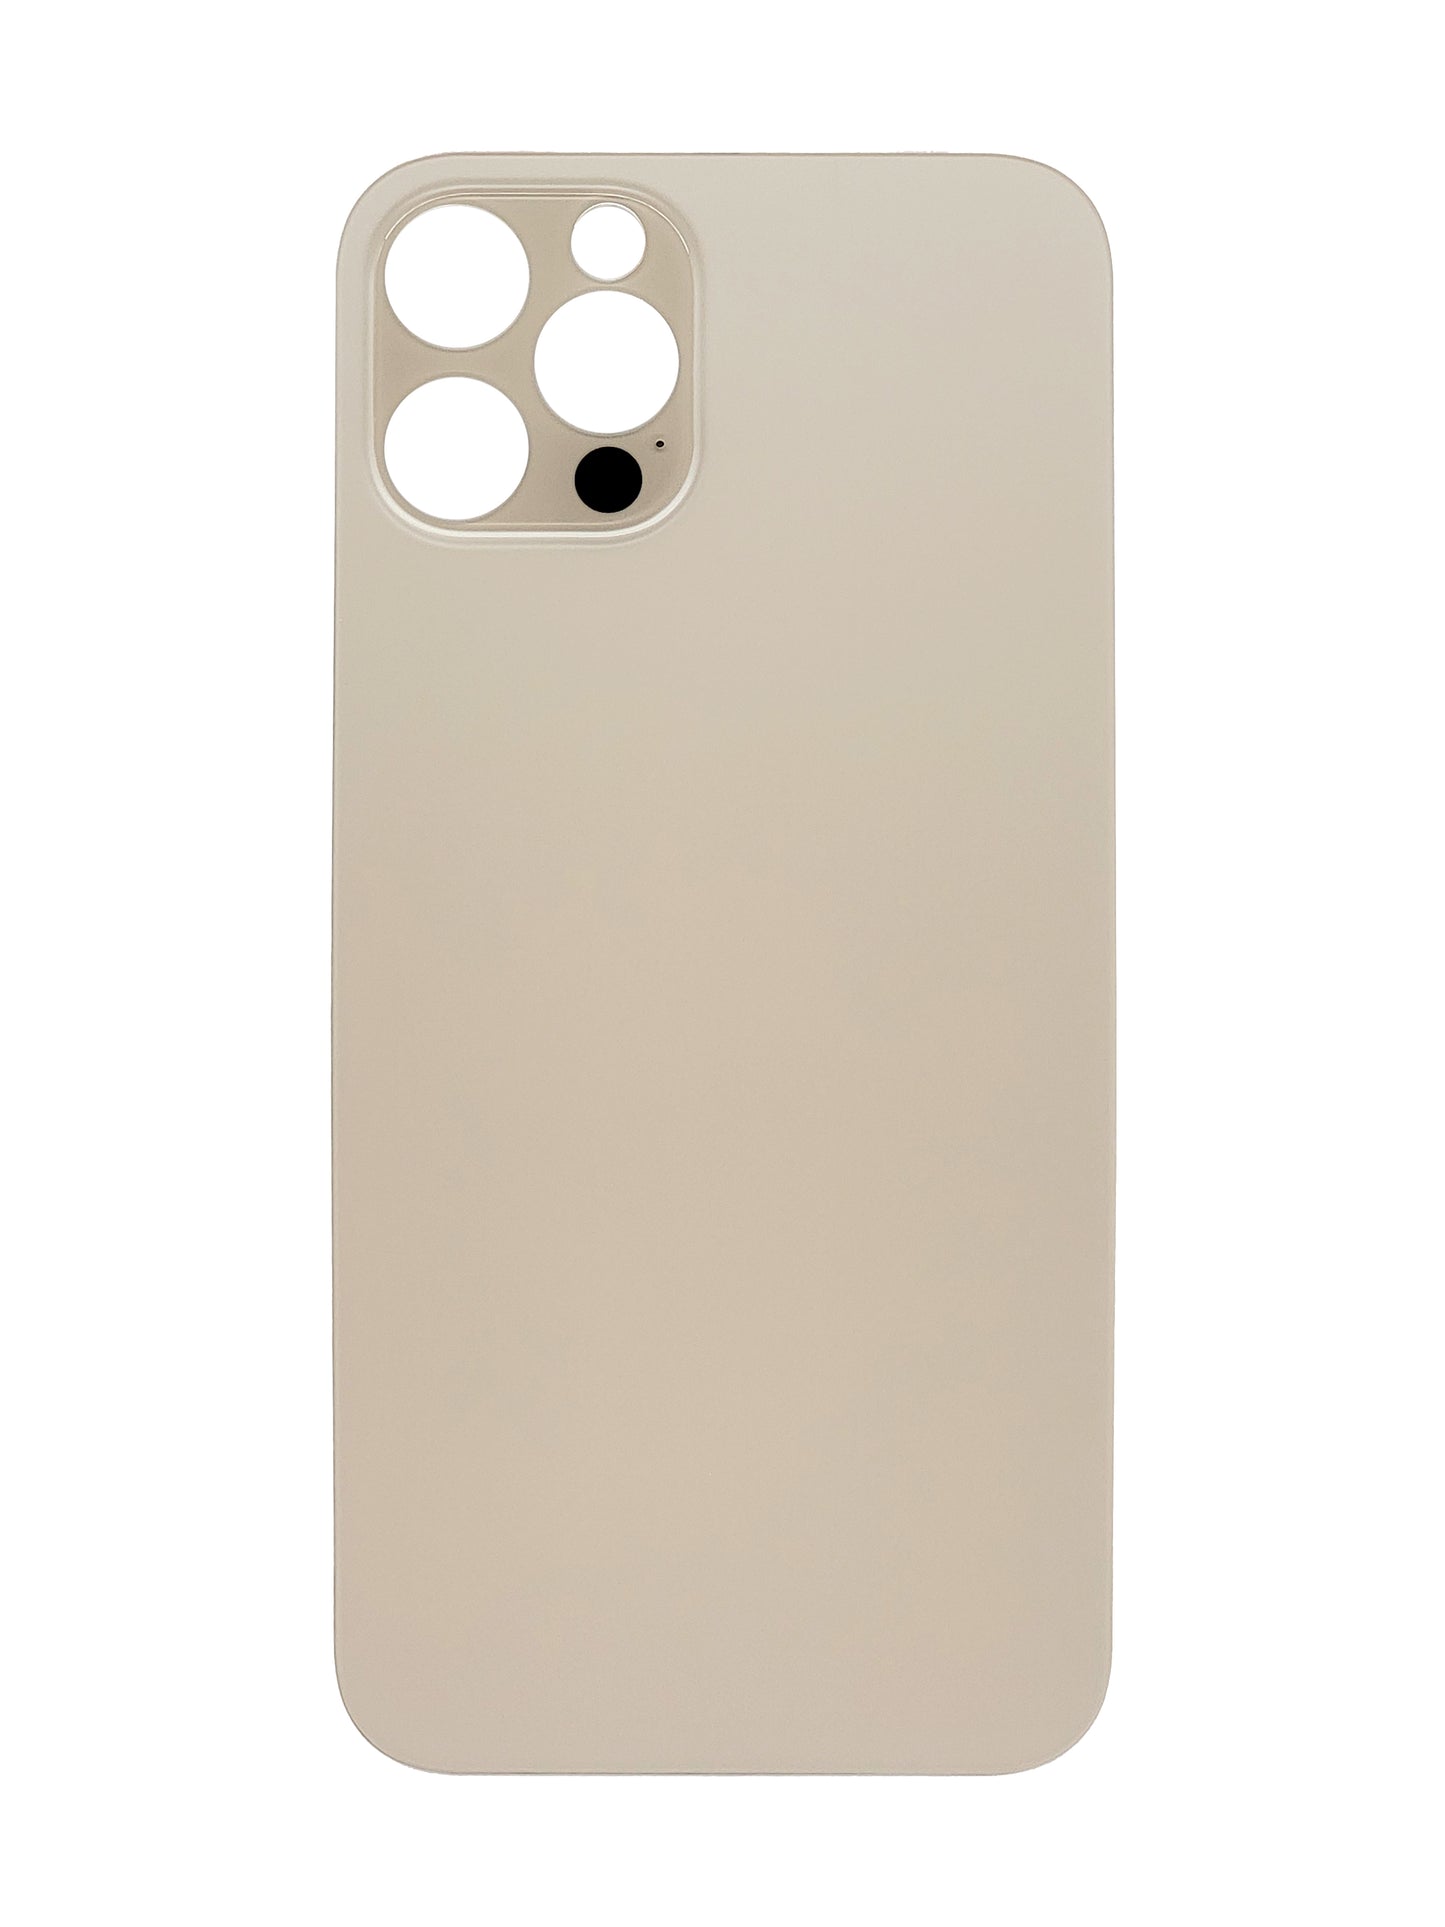 iPhone 12 Pro Back Glass (No Logo) (Gold)